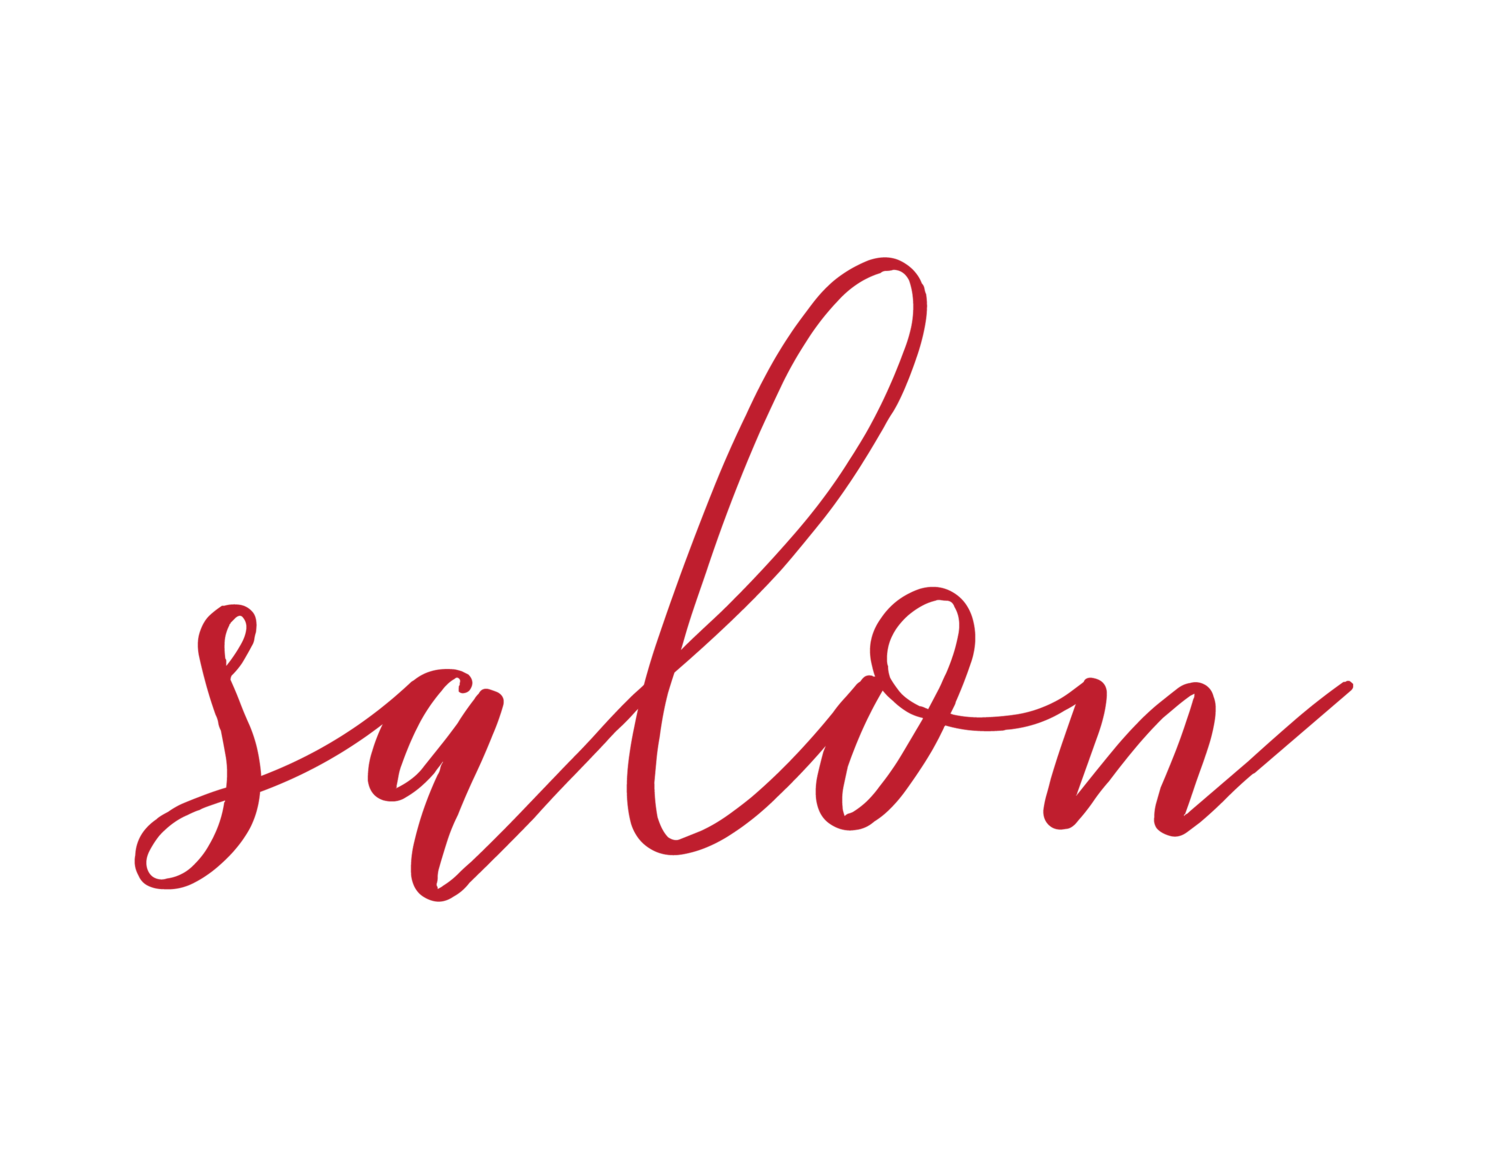 Rush Salon